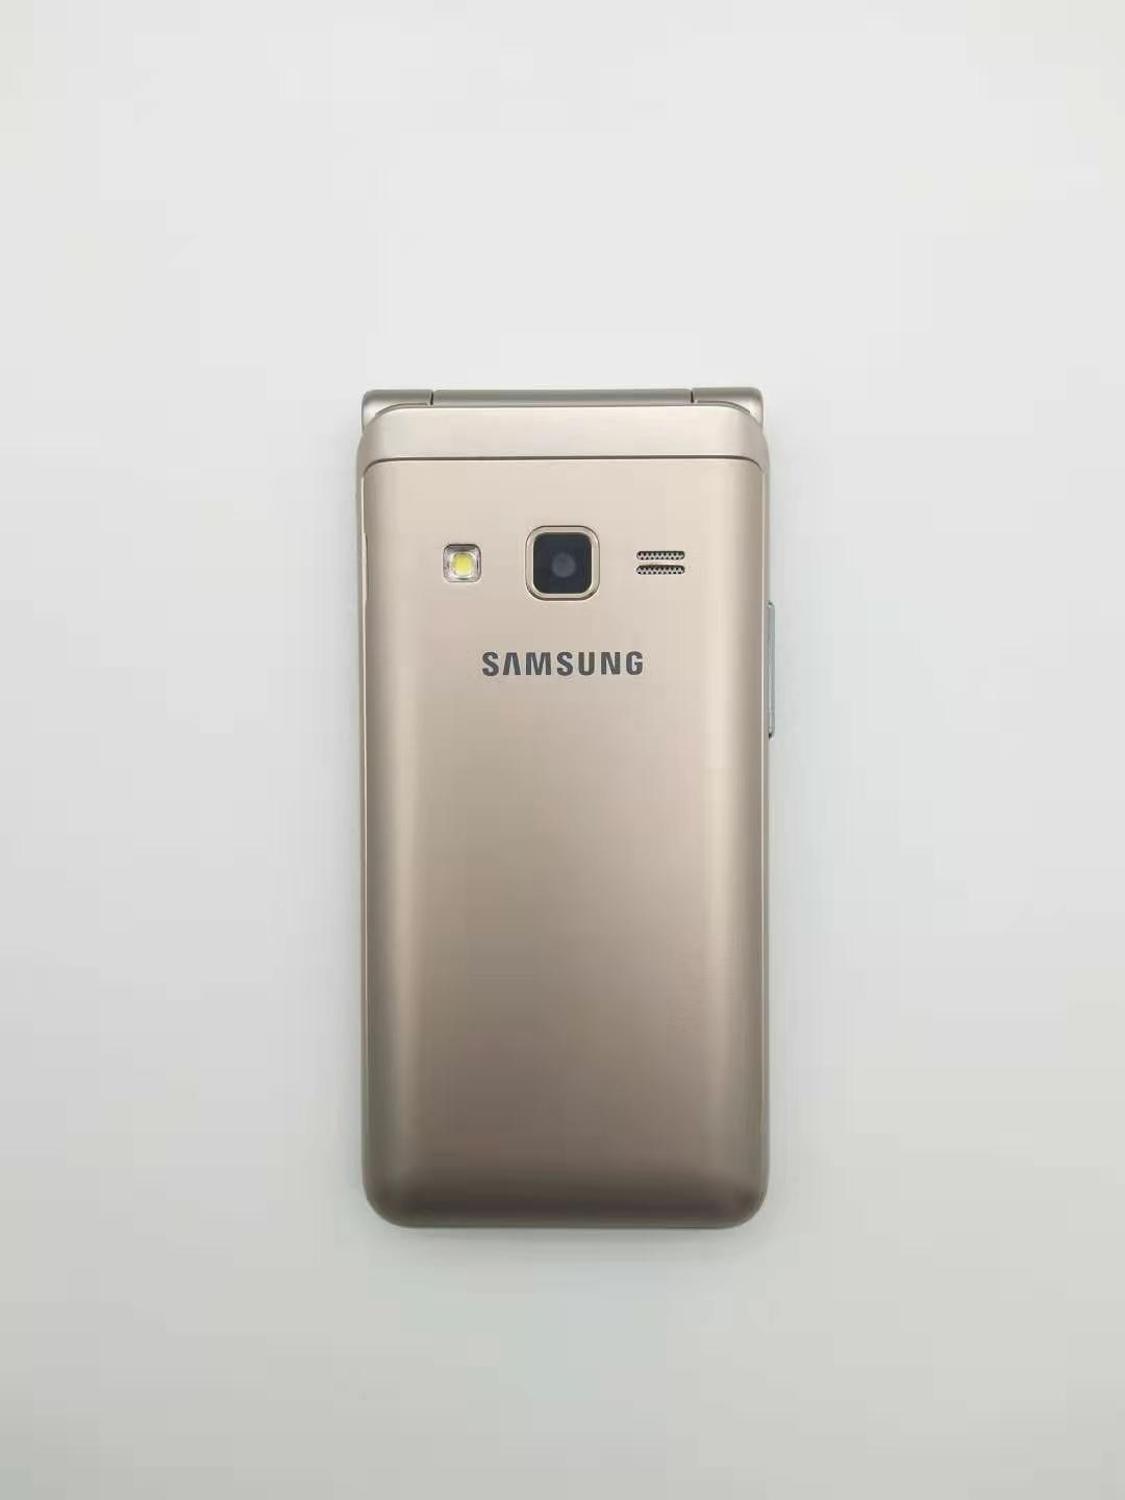 Original Samsung Galaxy Folder G1600 Dual SIM Quad Core 2GB RAM 16GB ROM 8.0MP 3.8" Android 6.0 Flip Smartphone refurbished